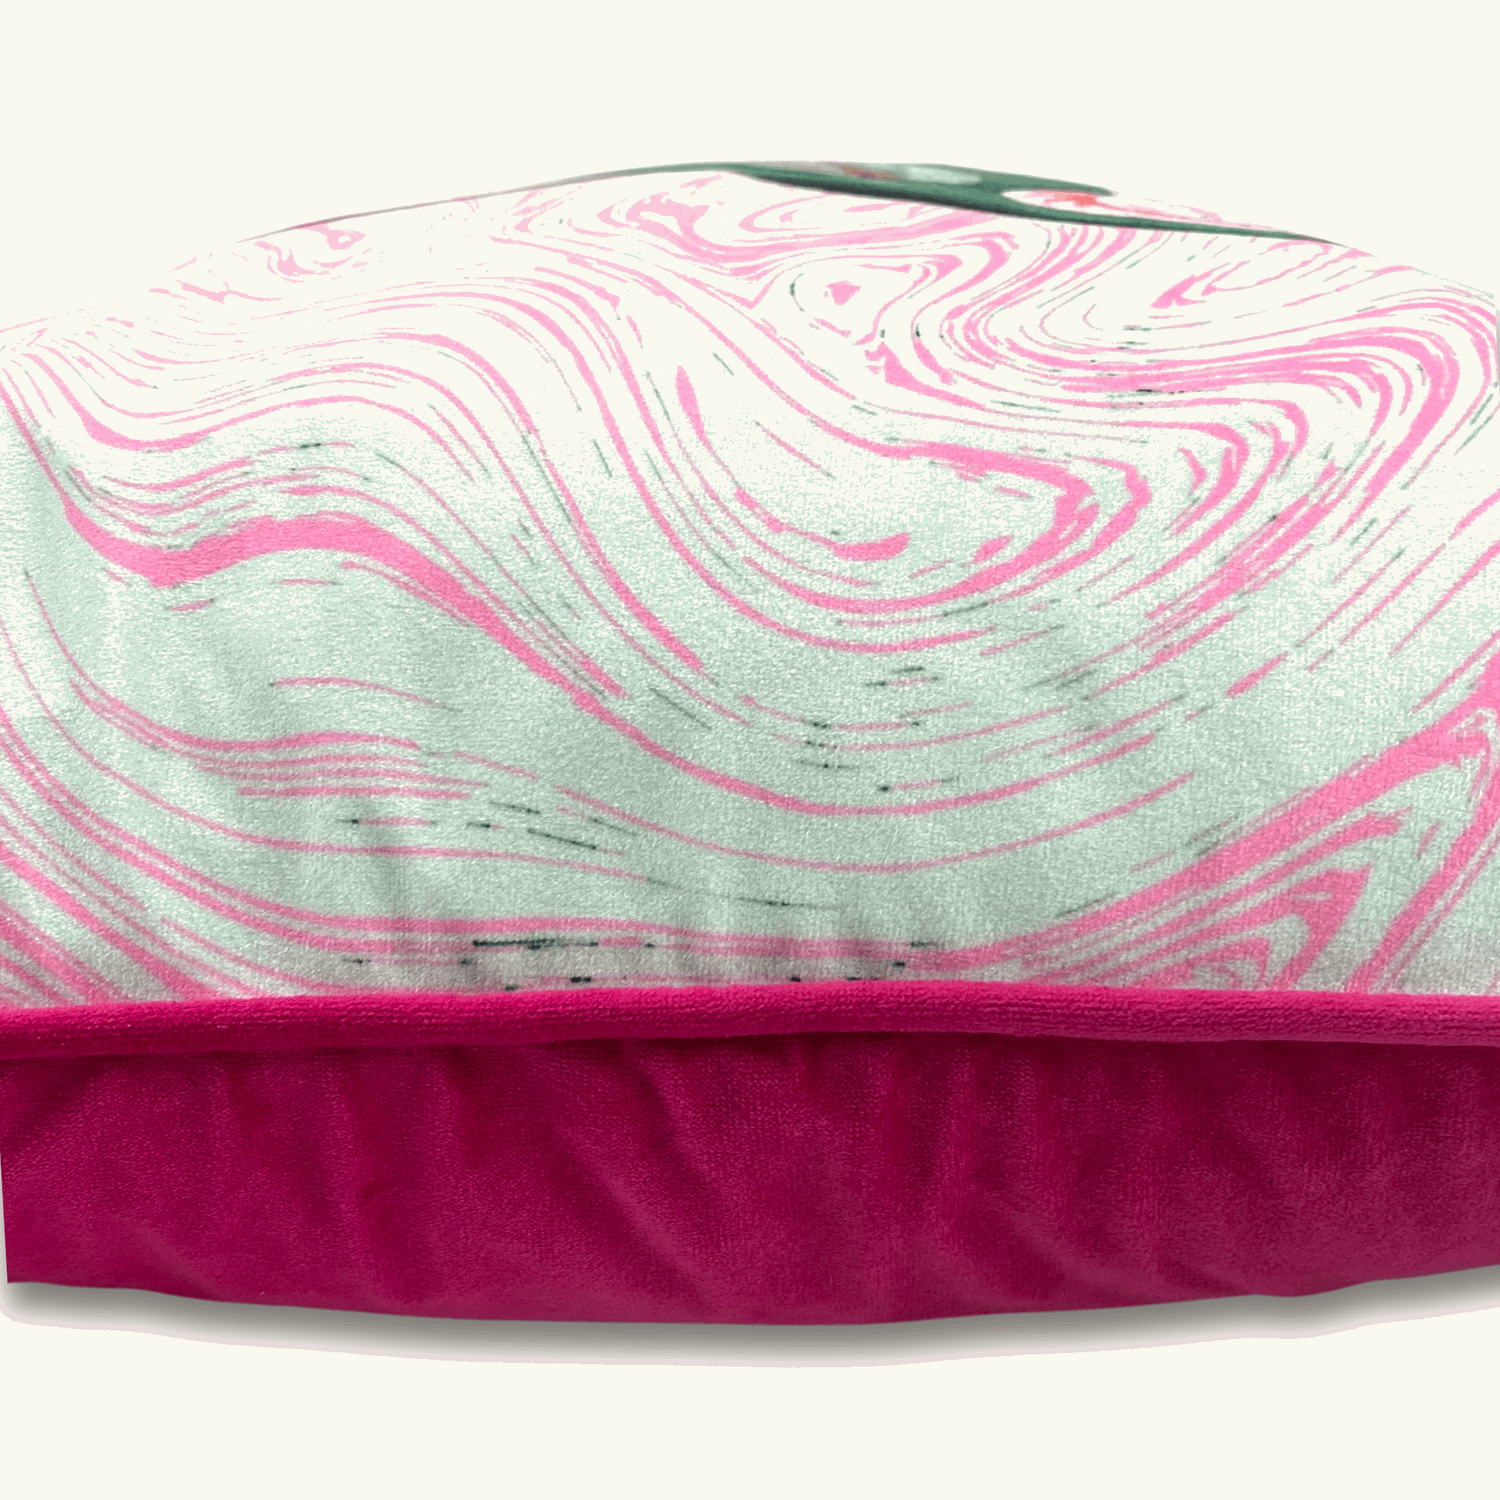 Velvet Bird Hot Pink Large Cushion Cover - Sunshine Thrift - Cushion covers